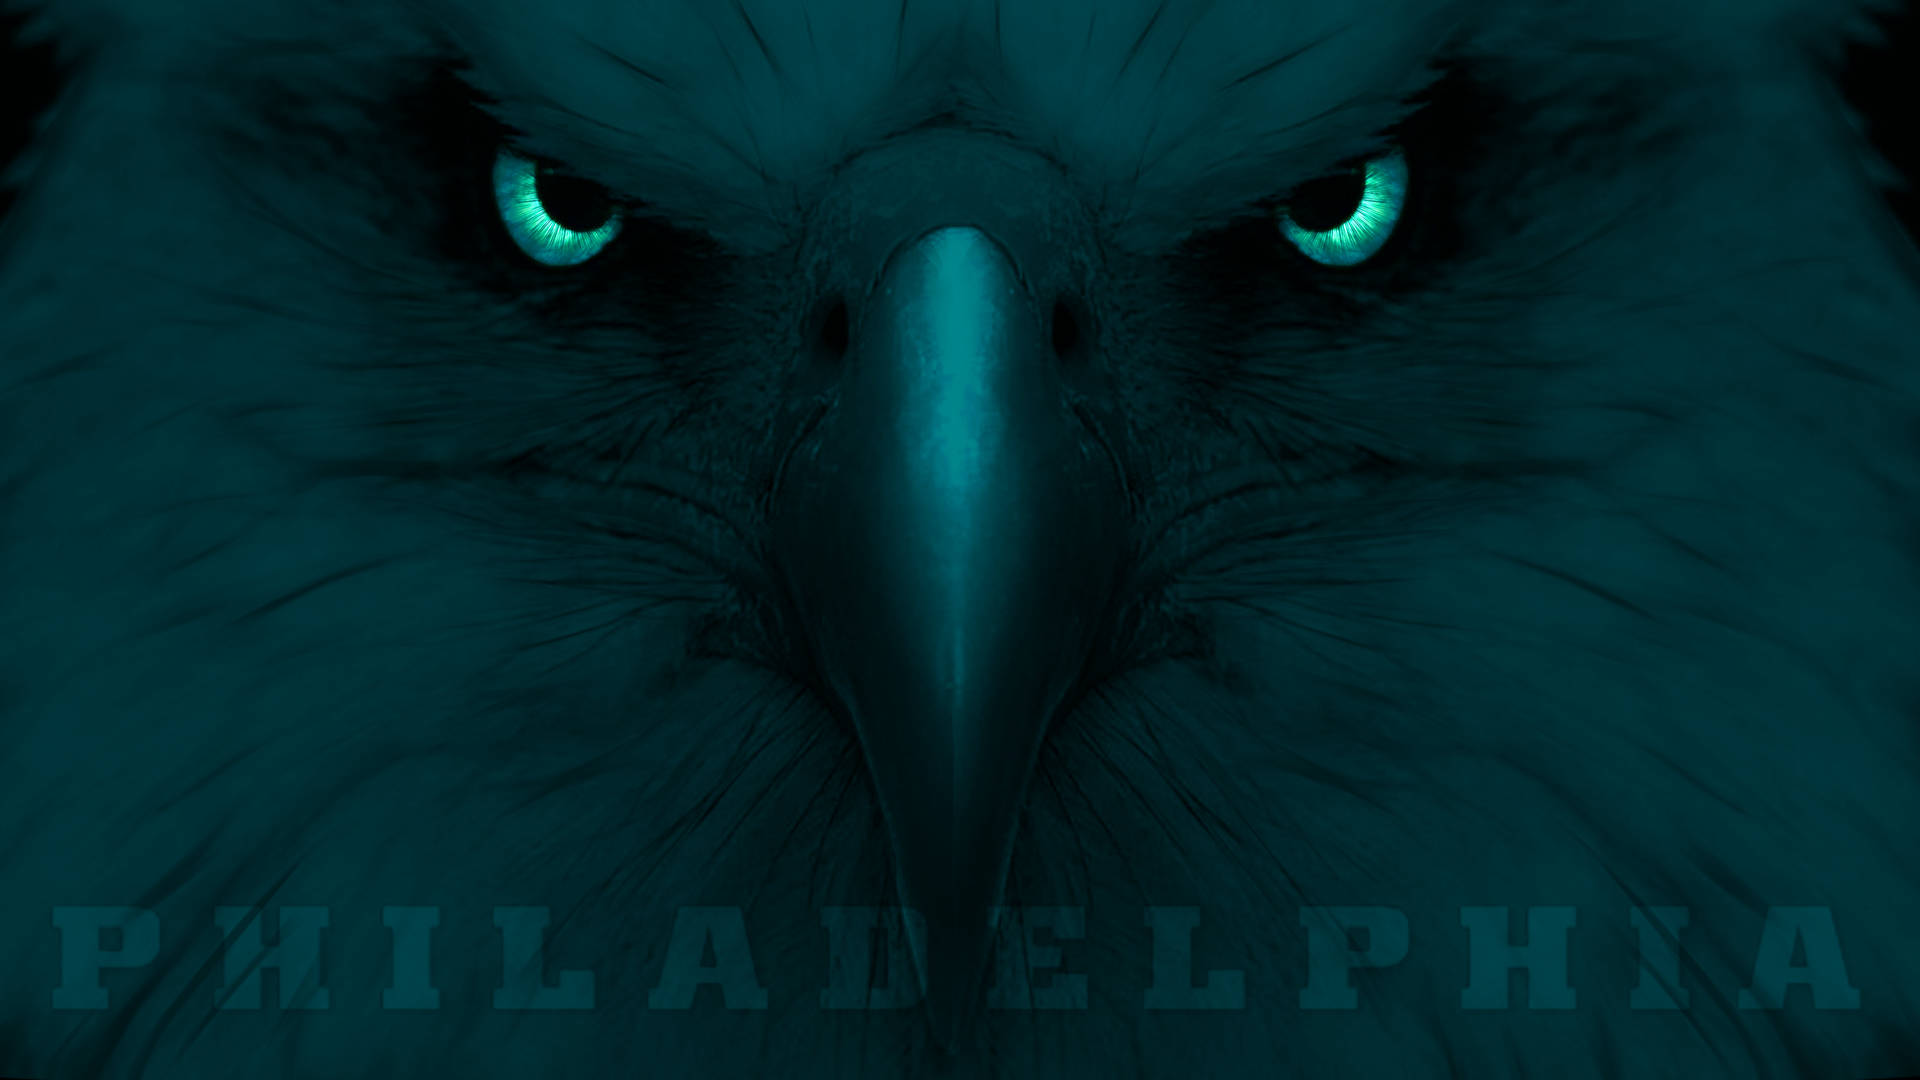 100 Free Philadelphia Eagles HD Wallpapers & Backgrounds